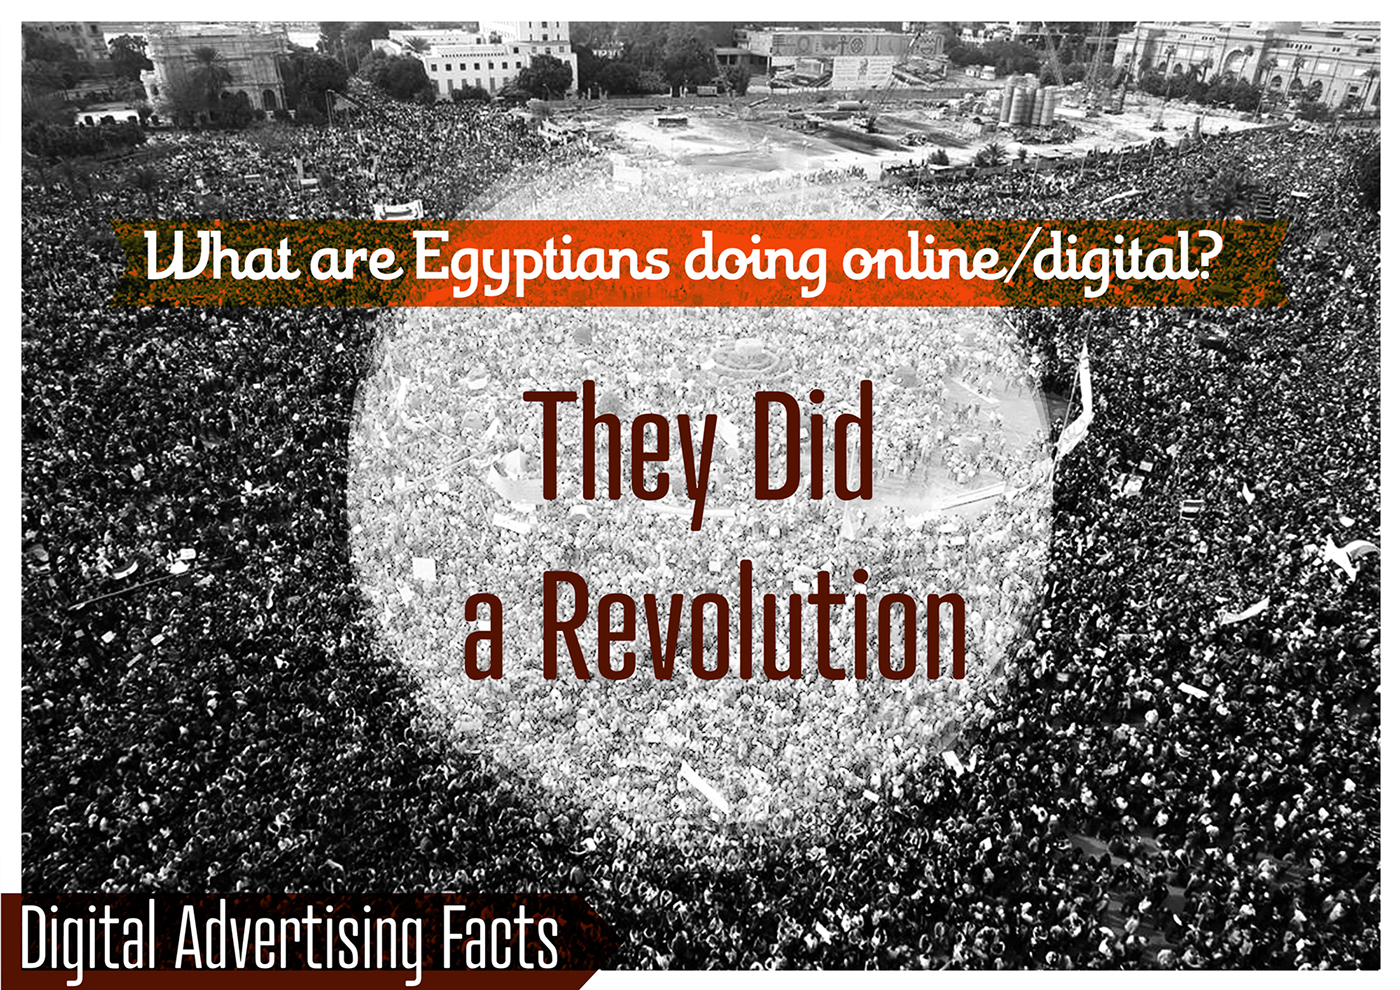 presentation  digital  advertising   Media  socialnetworking  video  Egypt  online